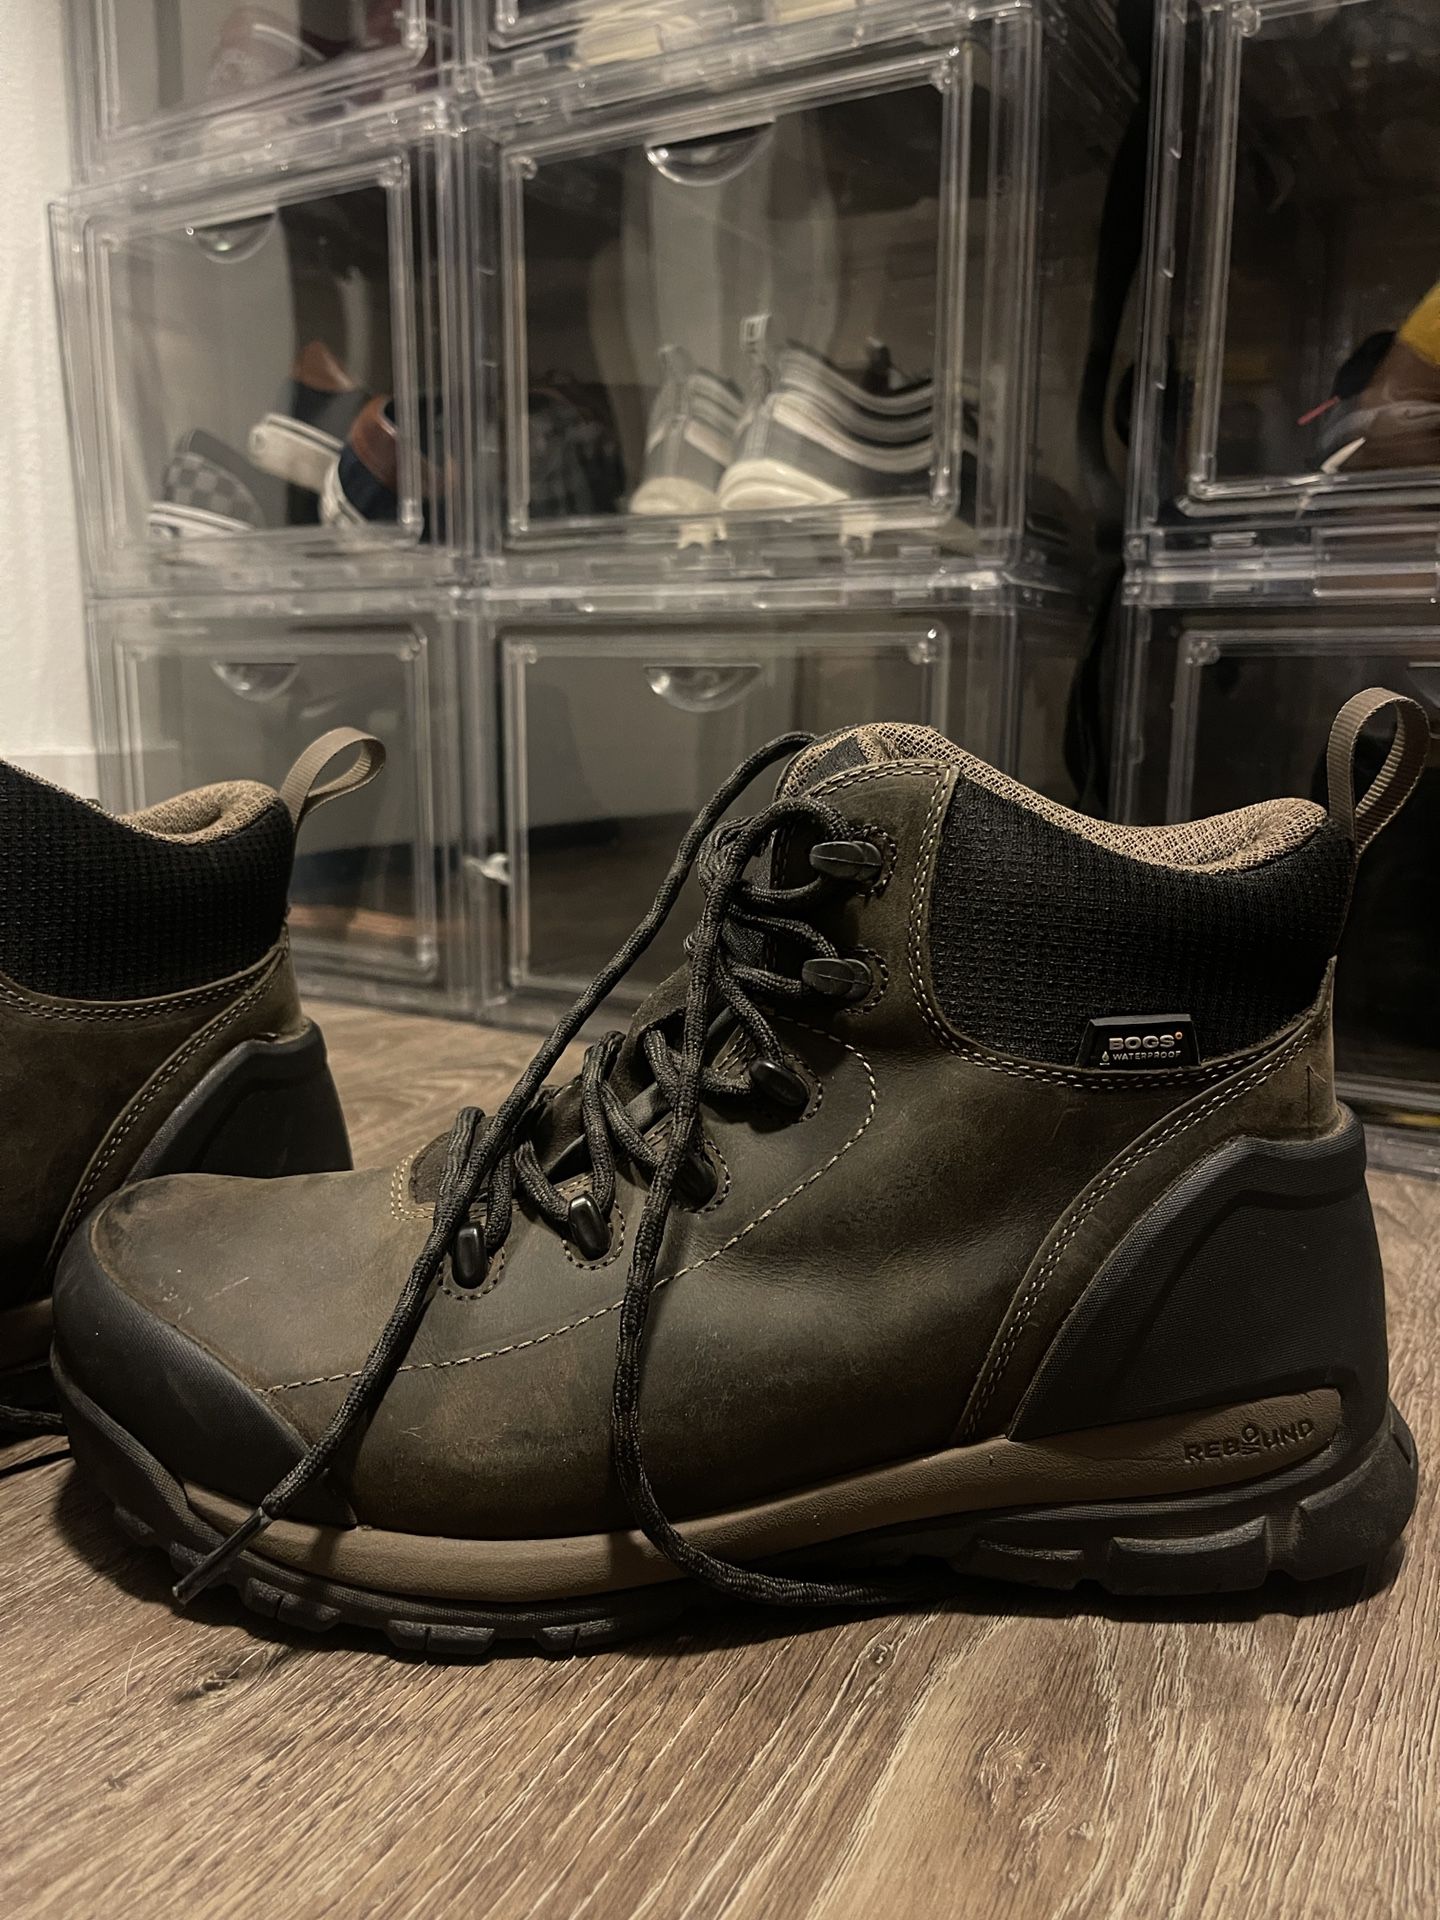 BOGS Waterproof Working/hiking Boots Size 9.5